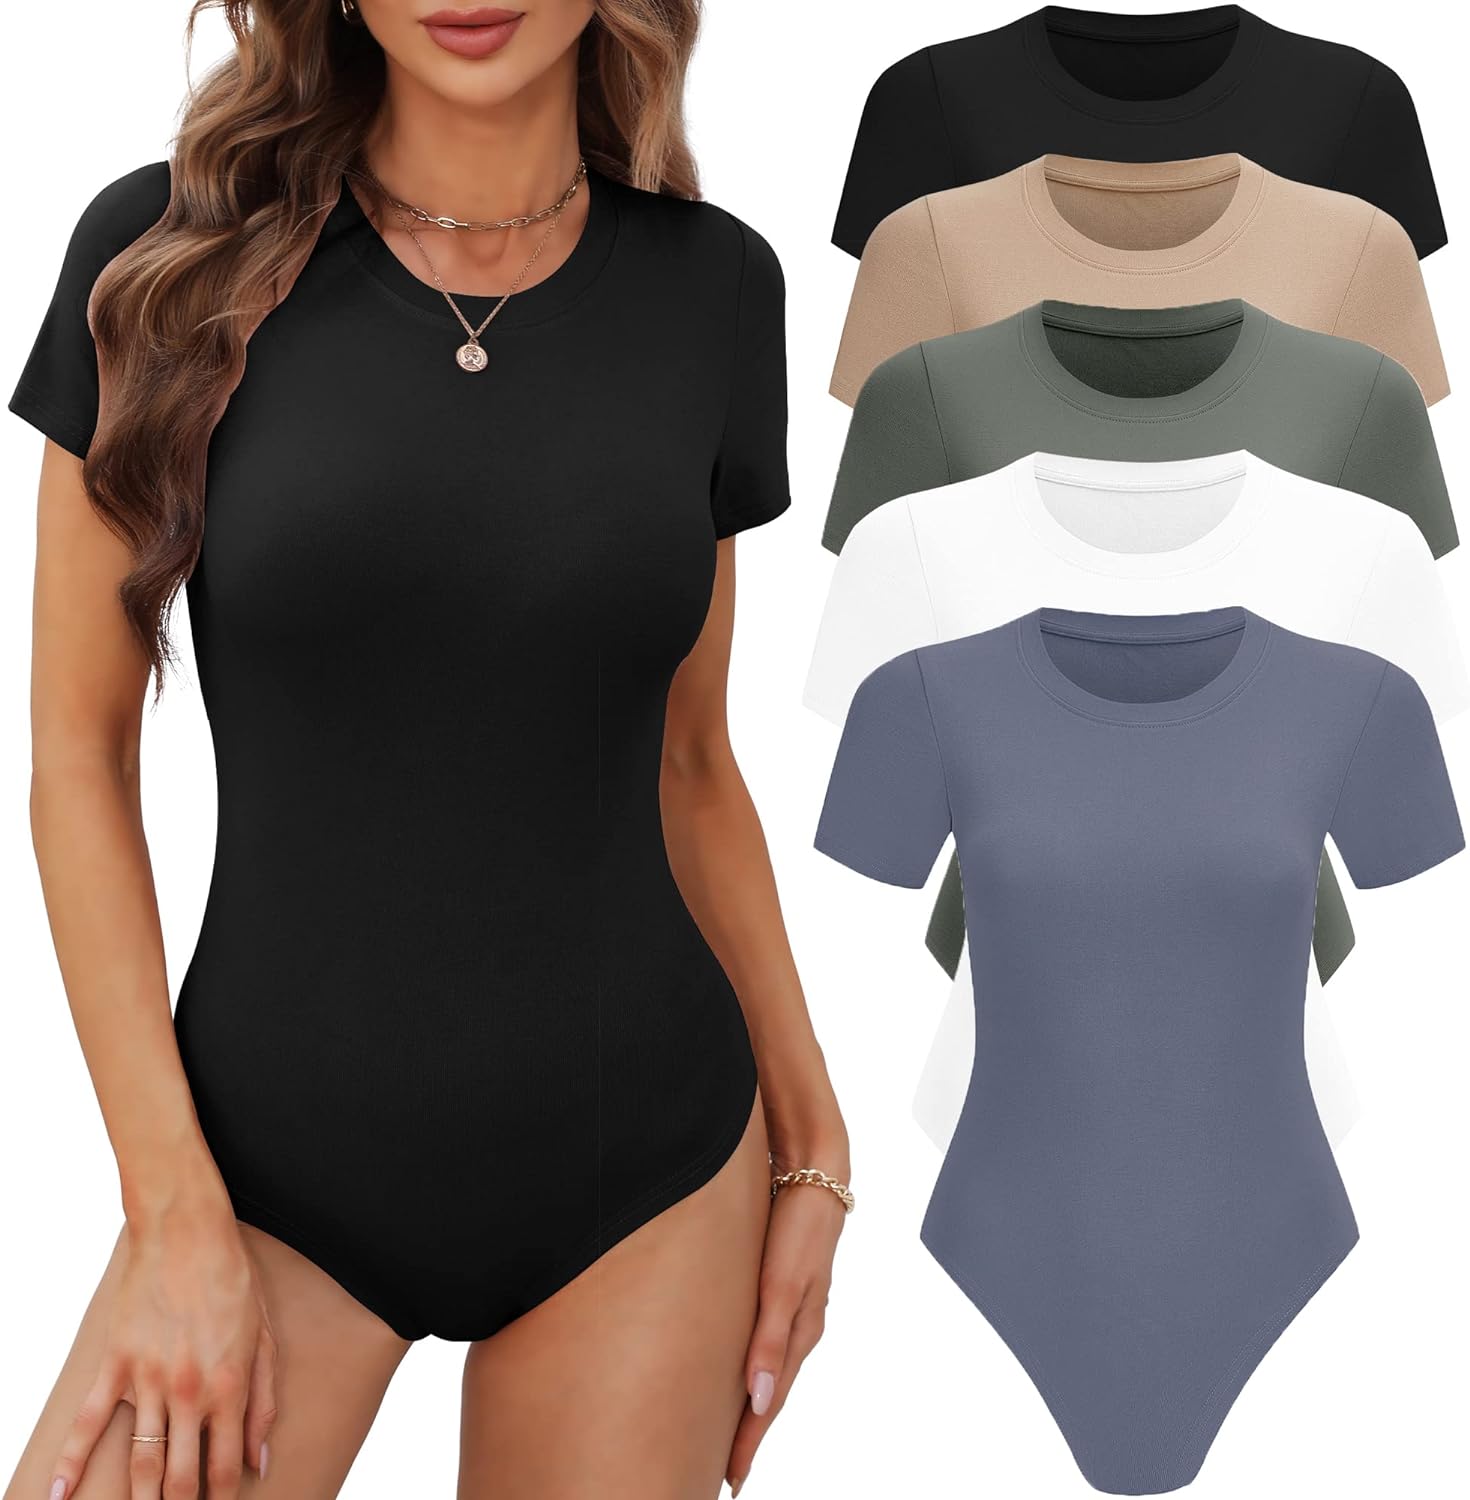 Buy PUMIEY Bodysuit for Women Sleeveless Backless Tank Top Sharp